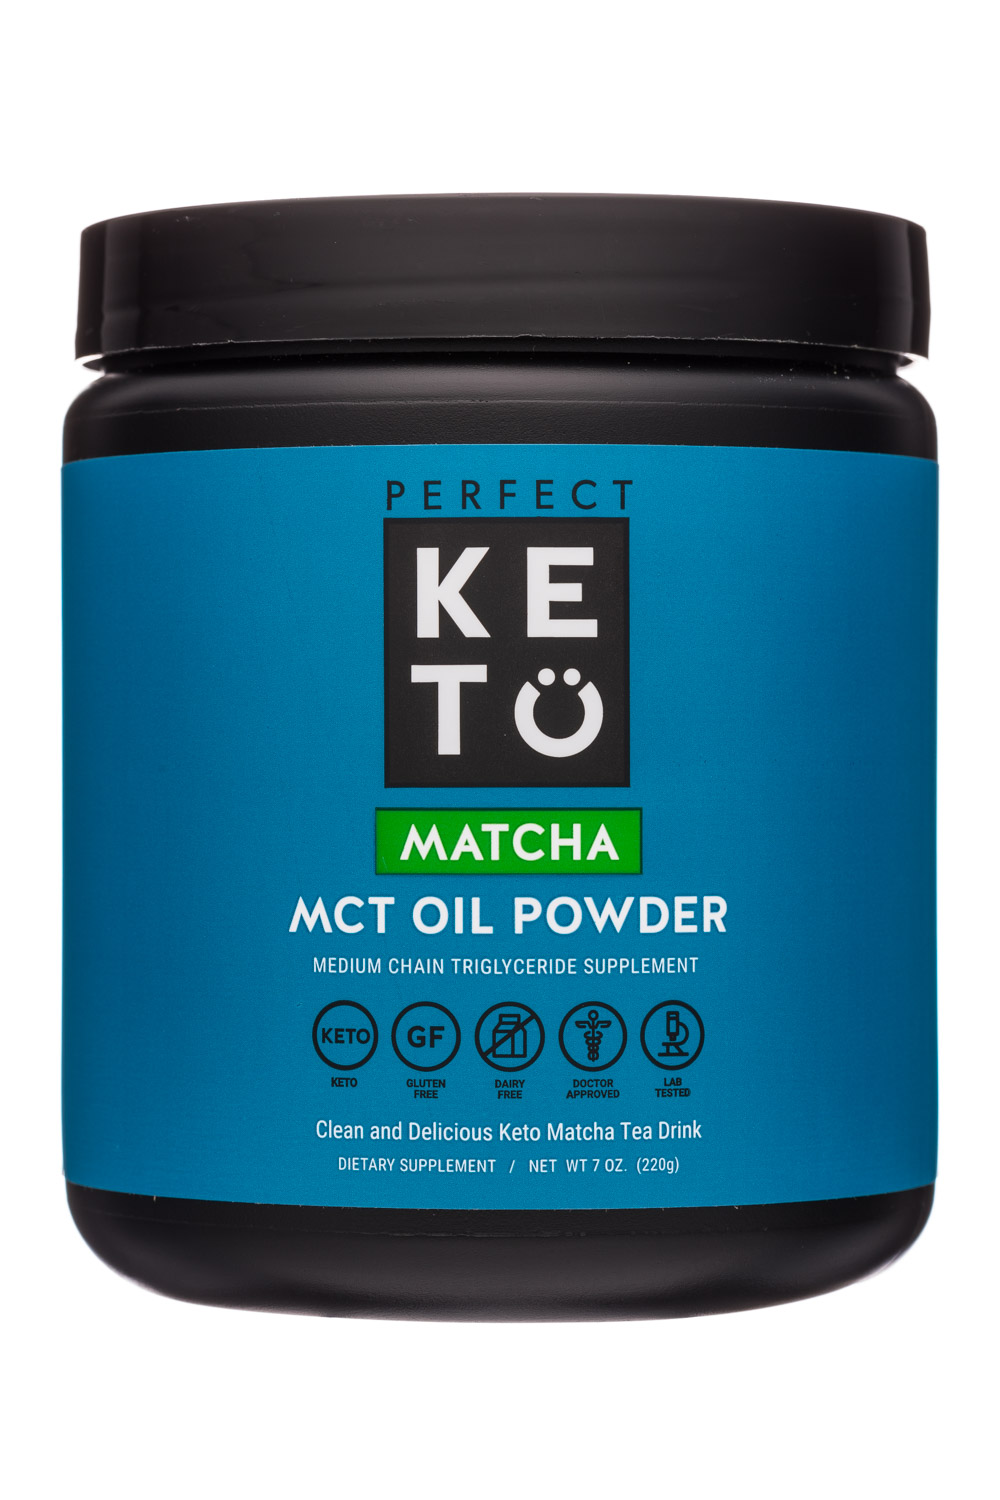 Matcha: MCT Oil Powder